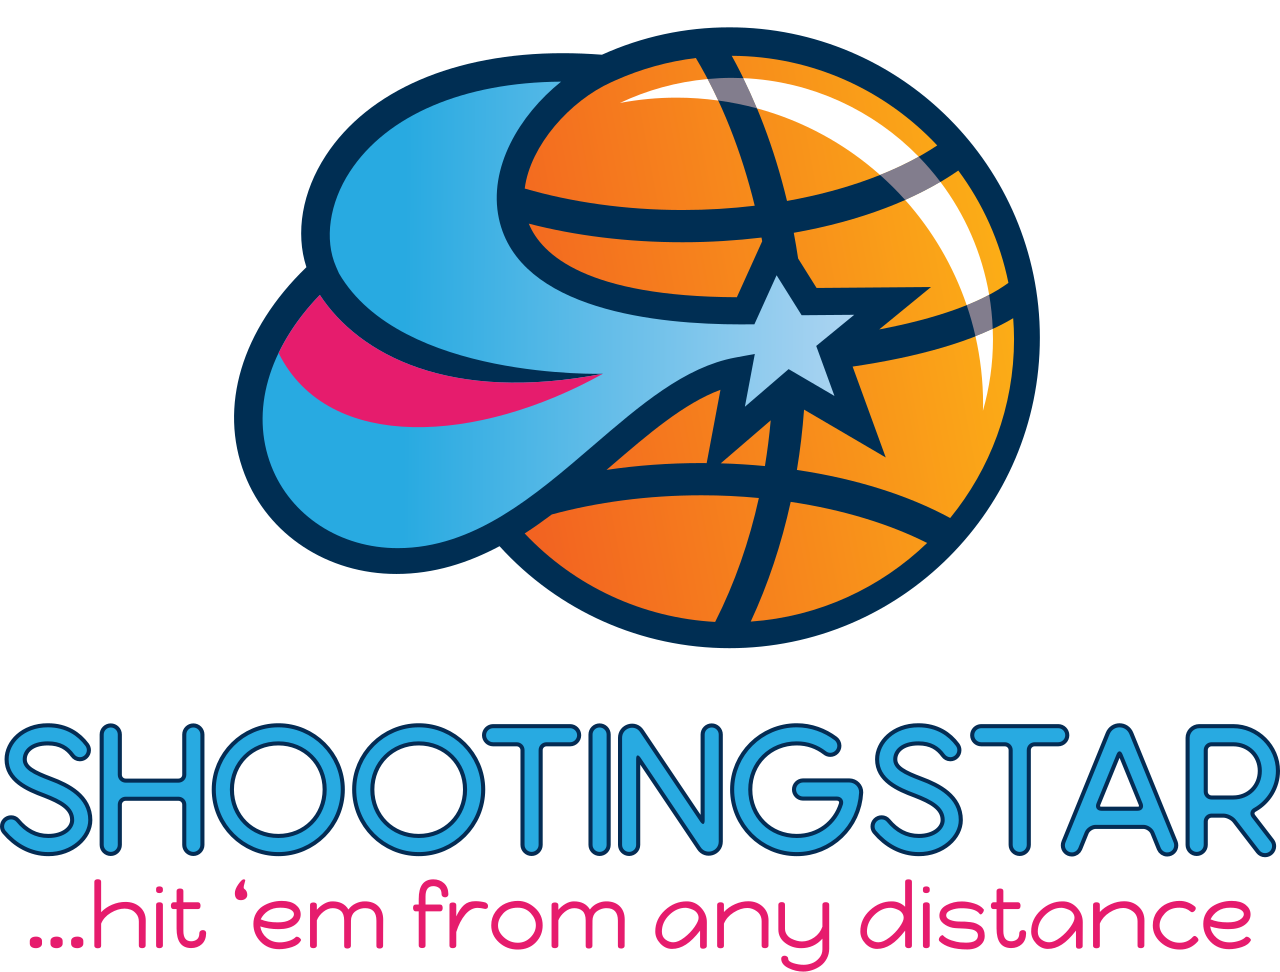 ShootingStar's web page